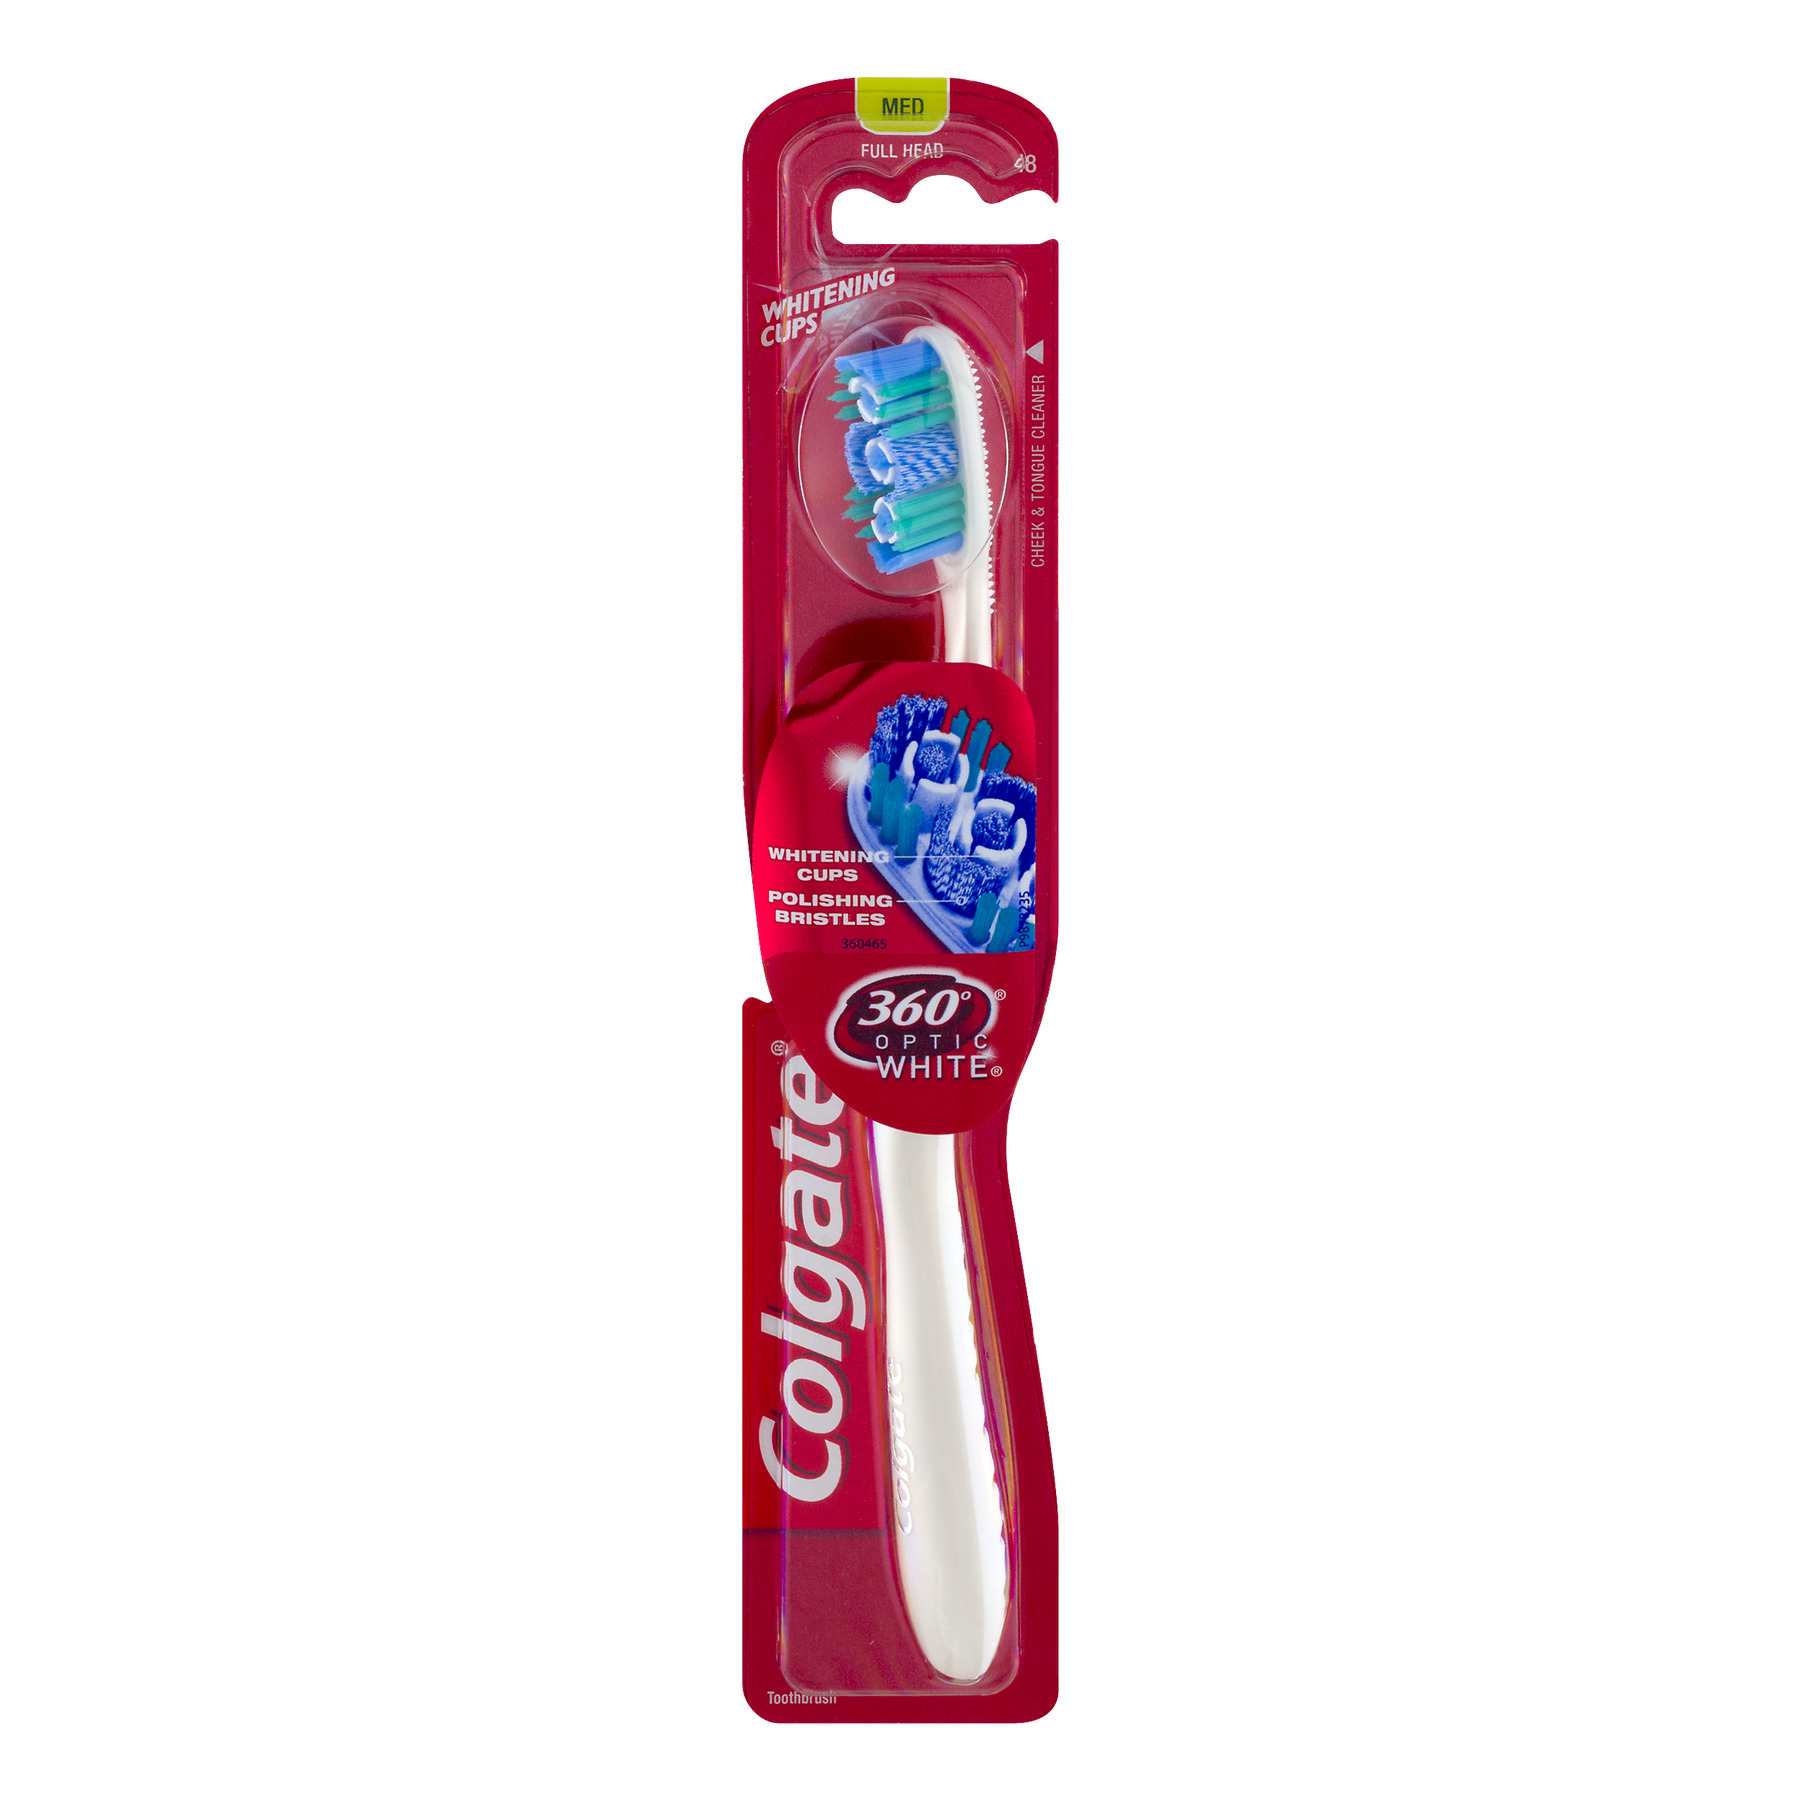 Colgate 360 Optic White Toothbrush, Medium, 1 Count - image 1 of 6